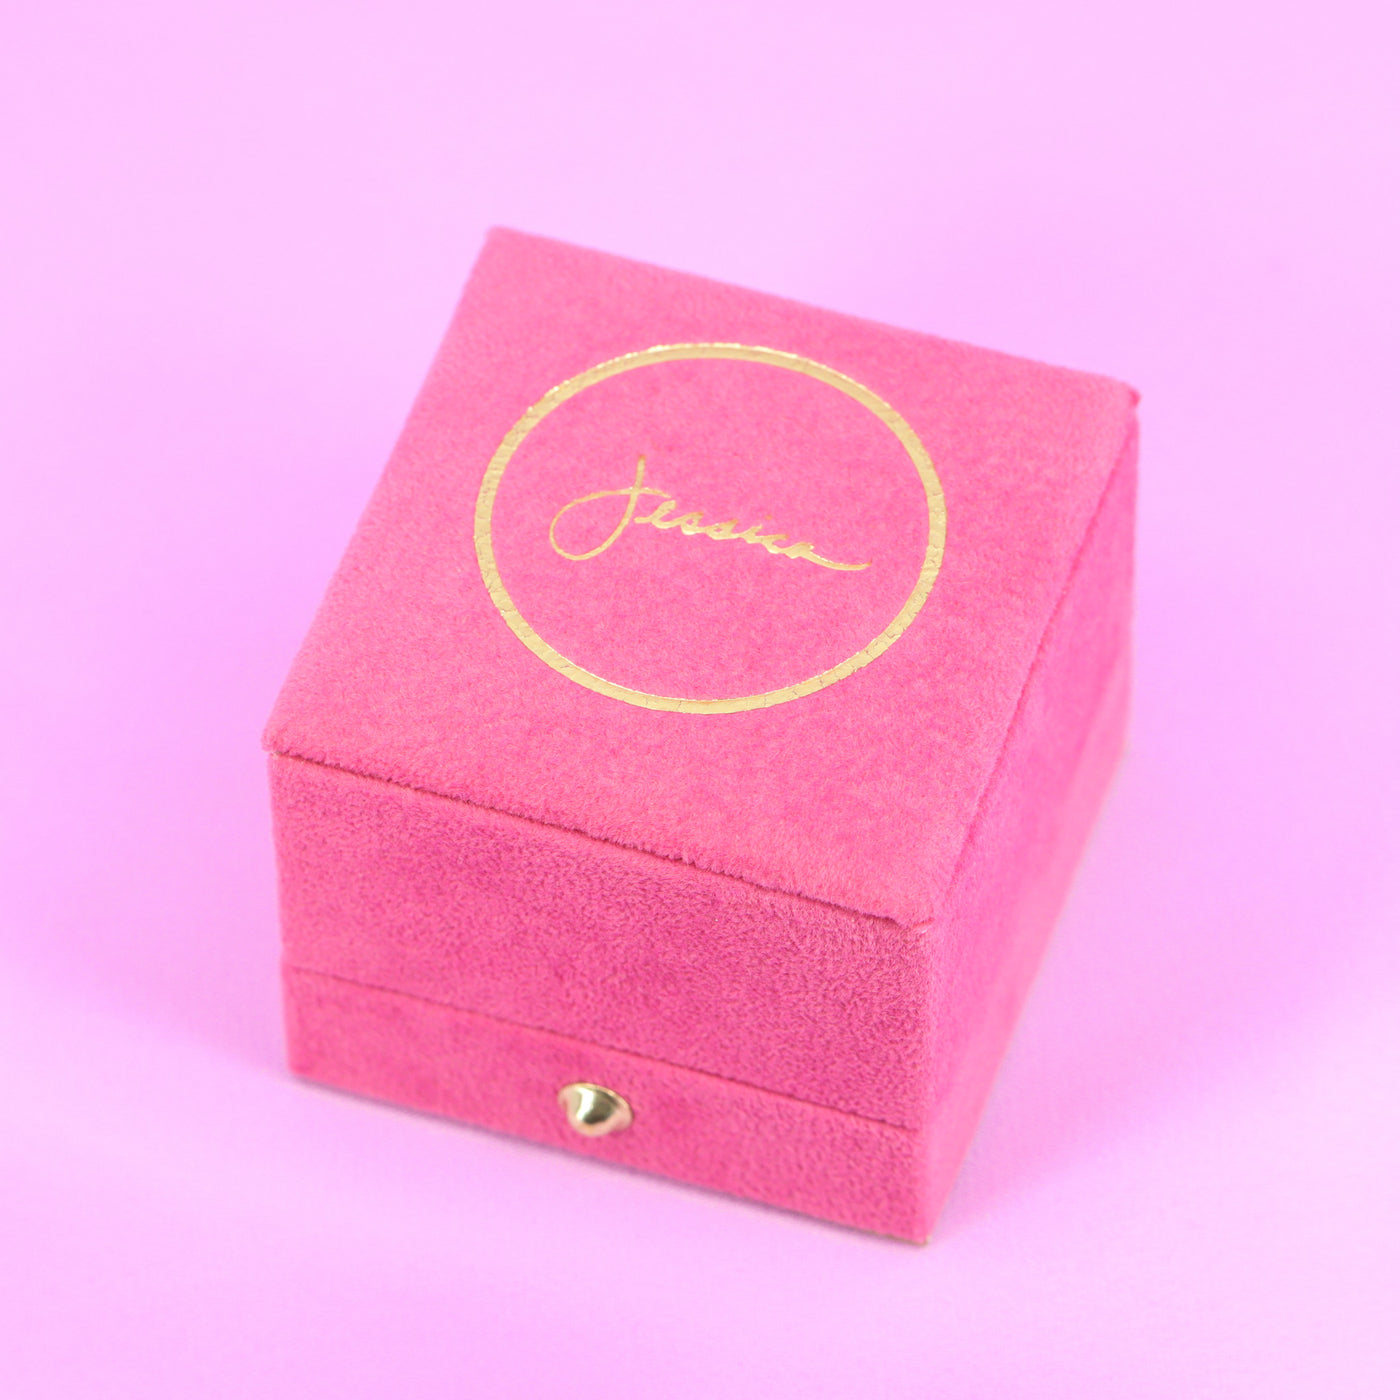 Posie Bäk : Wedding Proposal Ring Box with Crown | Kaepsel